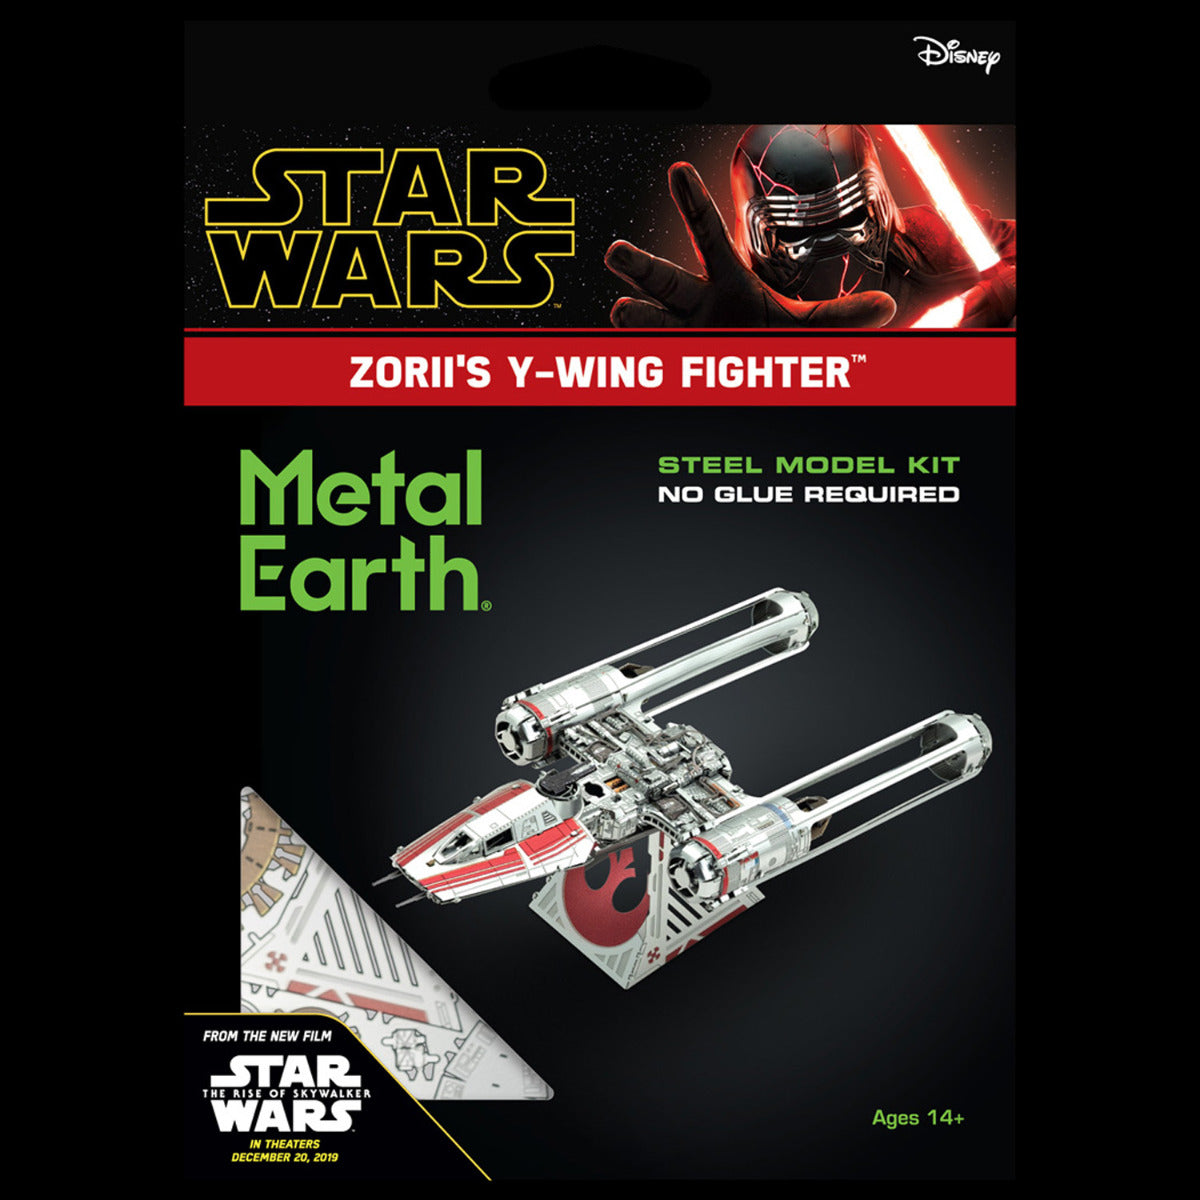 Metal Earth Metallbausätze MMS415 Star Wars “Der Aufstieg Skywalkers” Zorri's Y-Wing Fighter Resistance Metall Modell